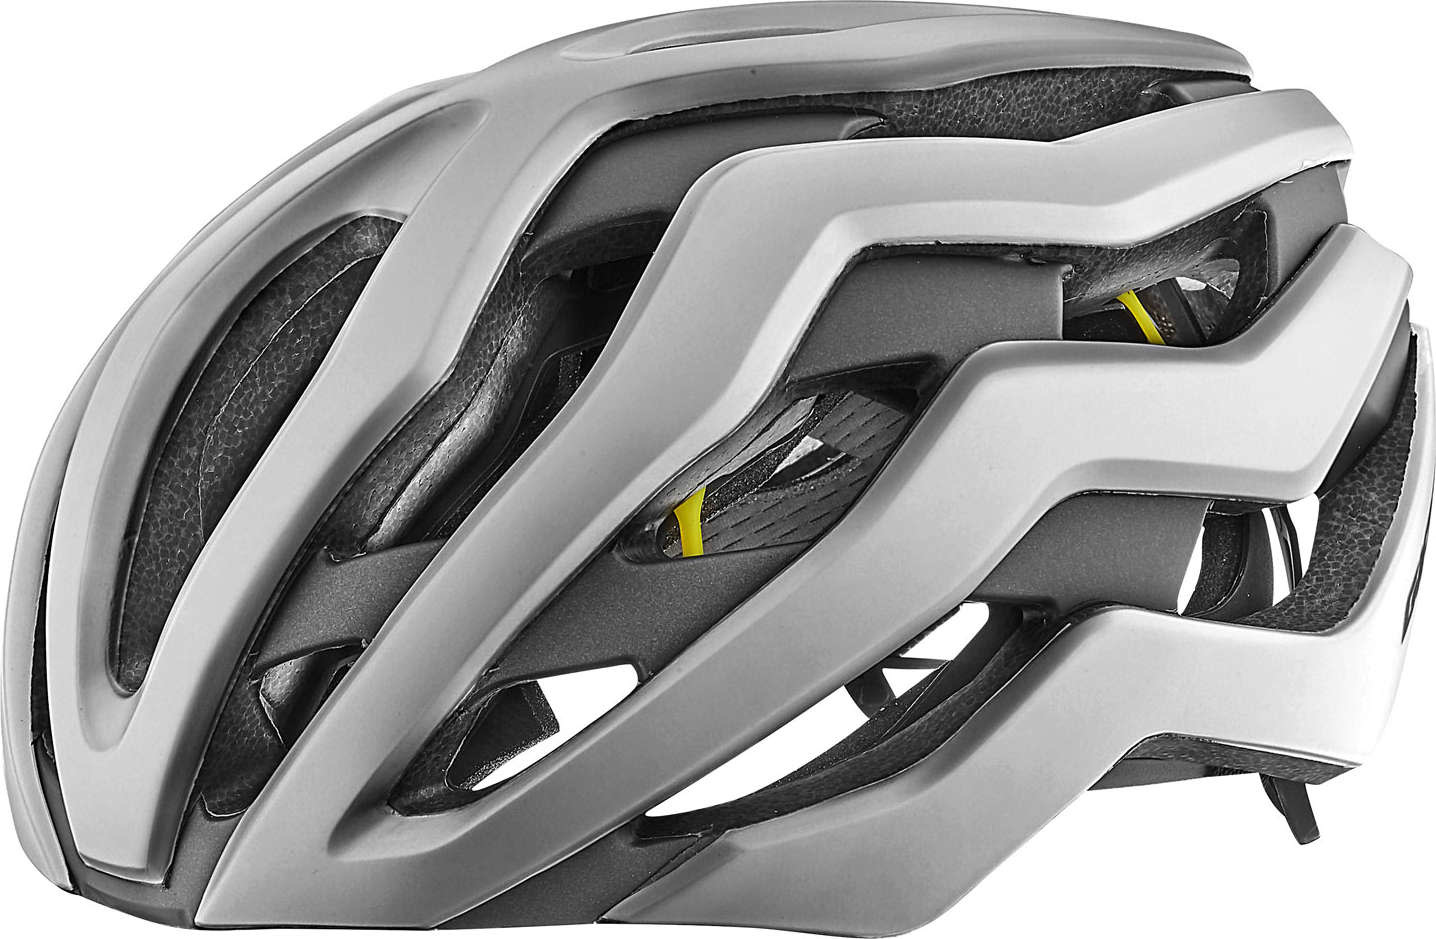 55-59cm 2020 Giant Rev Pro MIPS Helmet  - Gloss Metallic White Size Medium M 